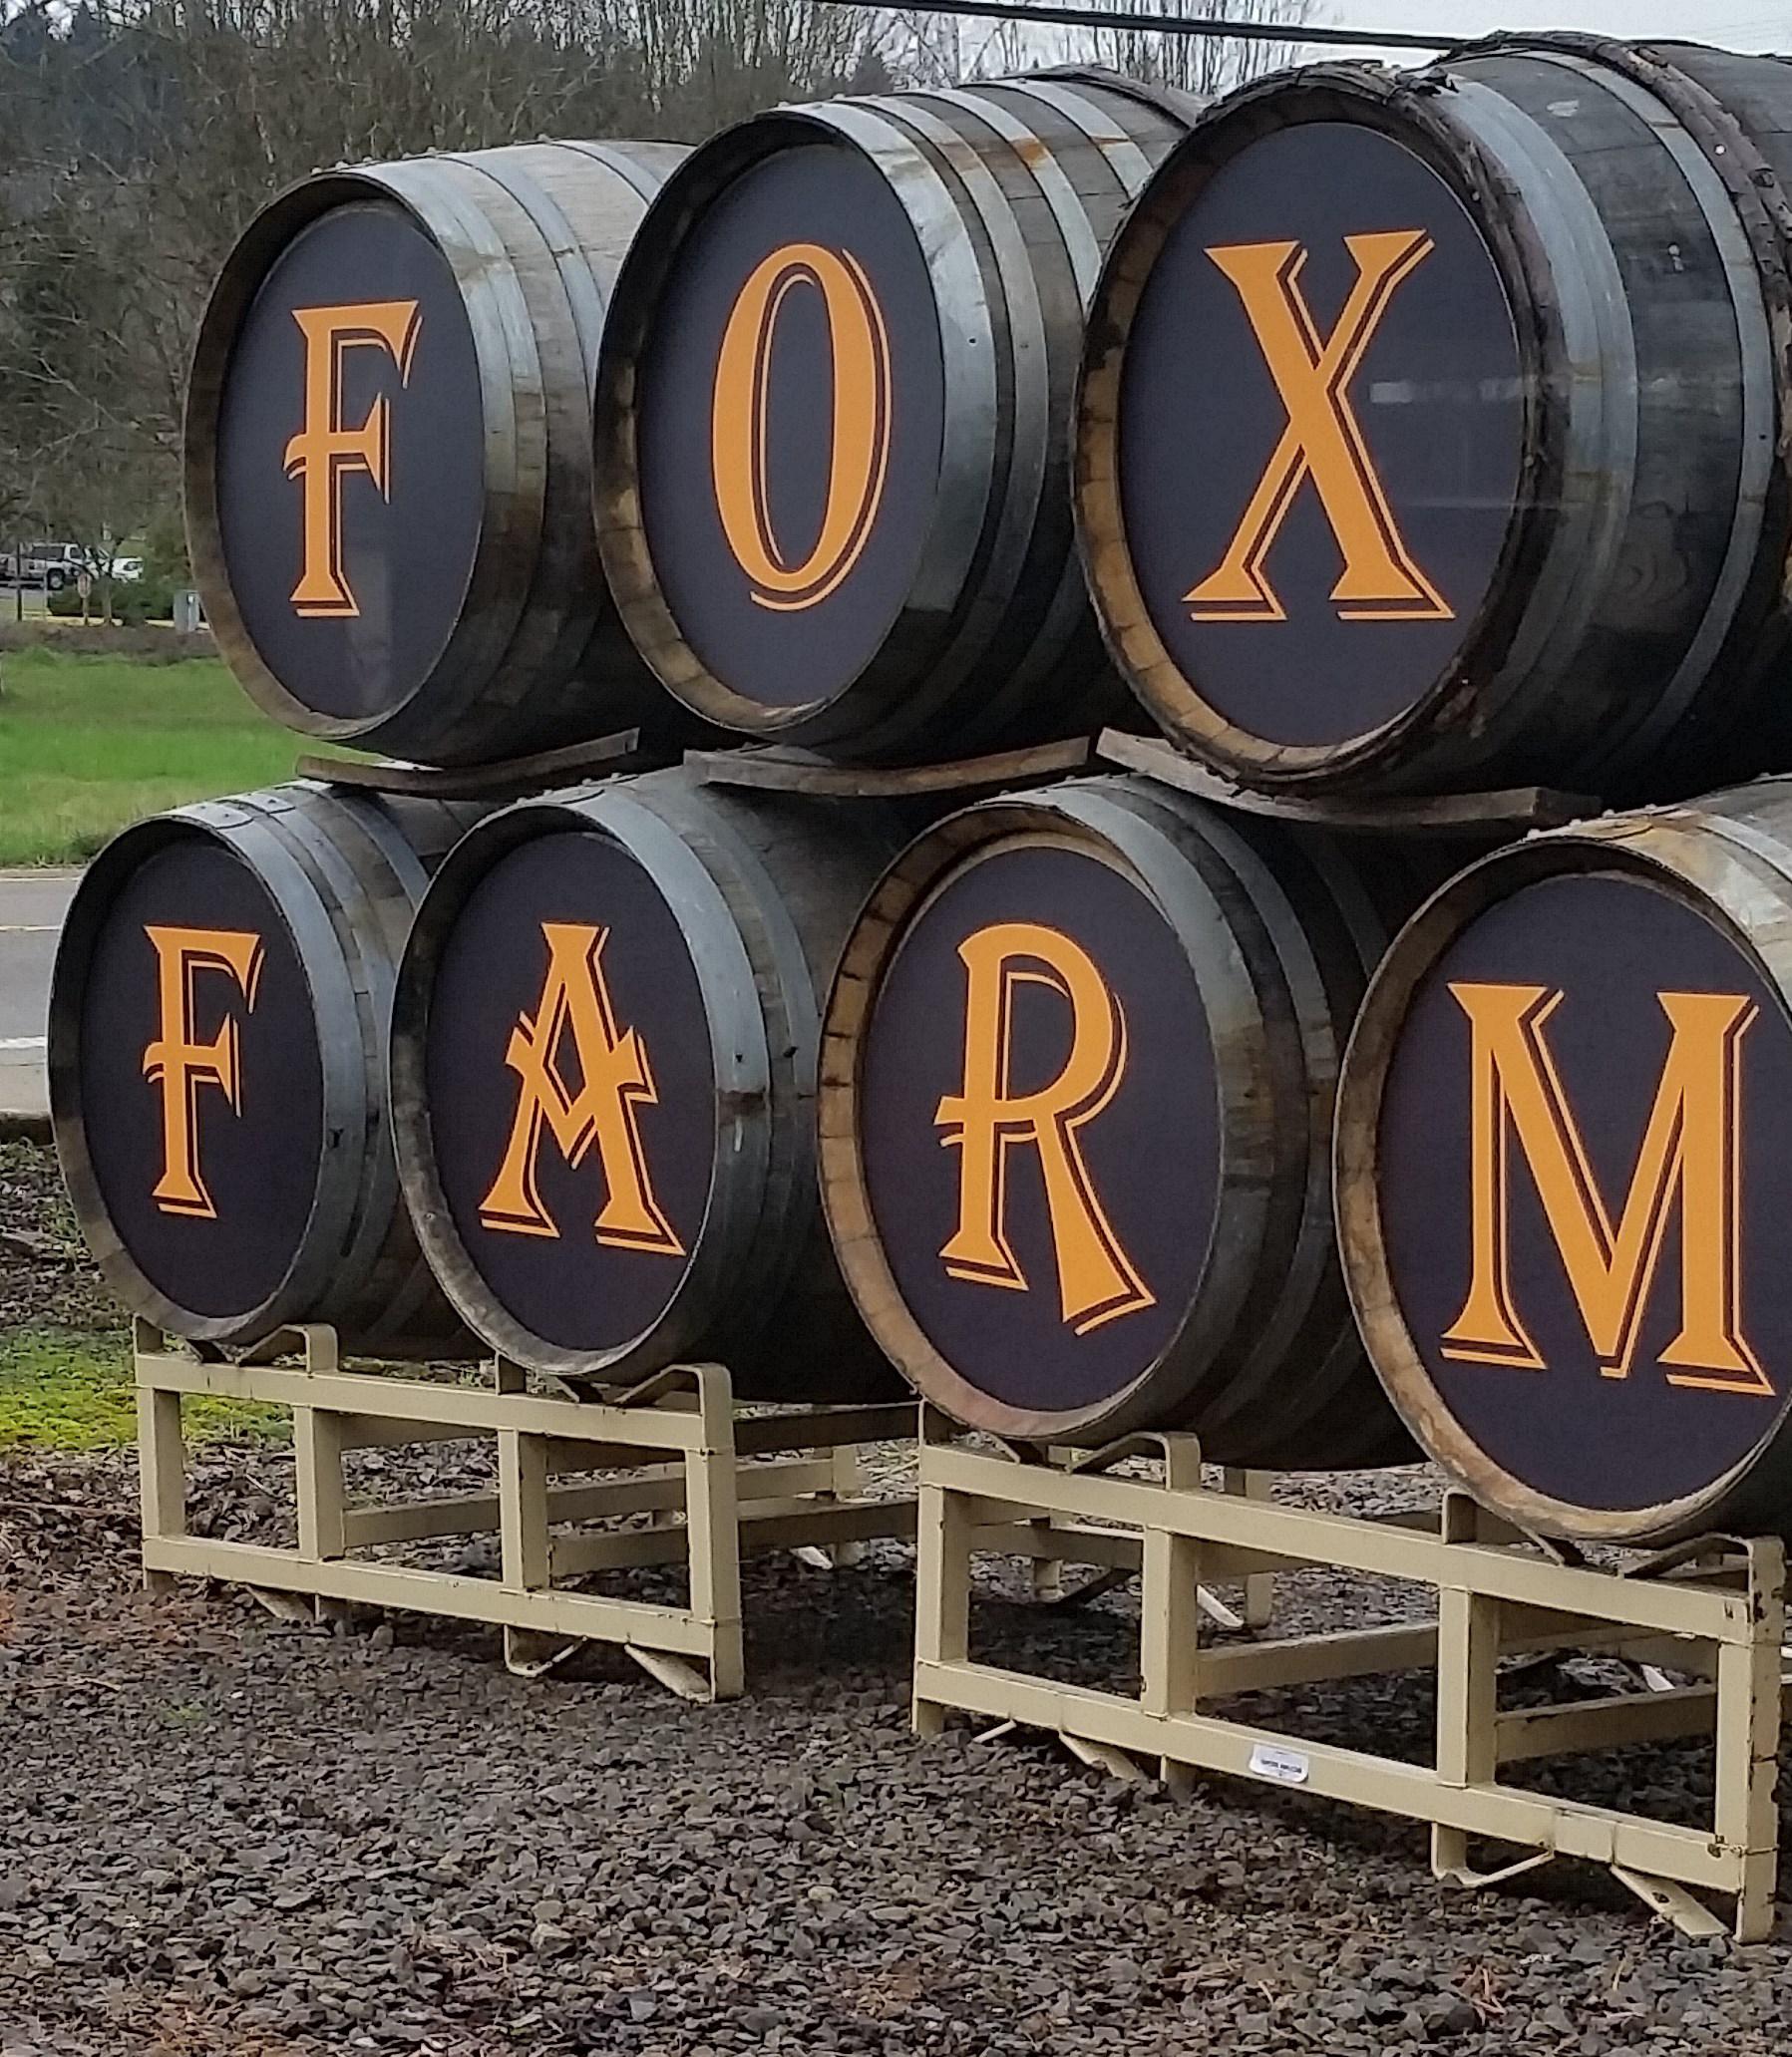 Image for Fox Farm Vineyards